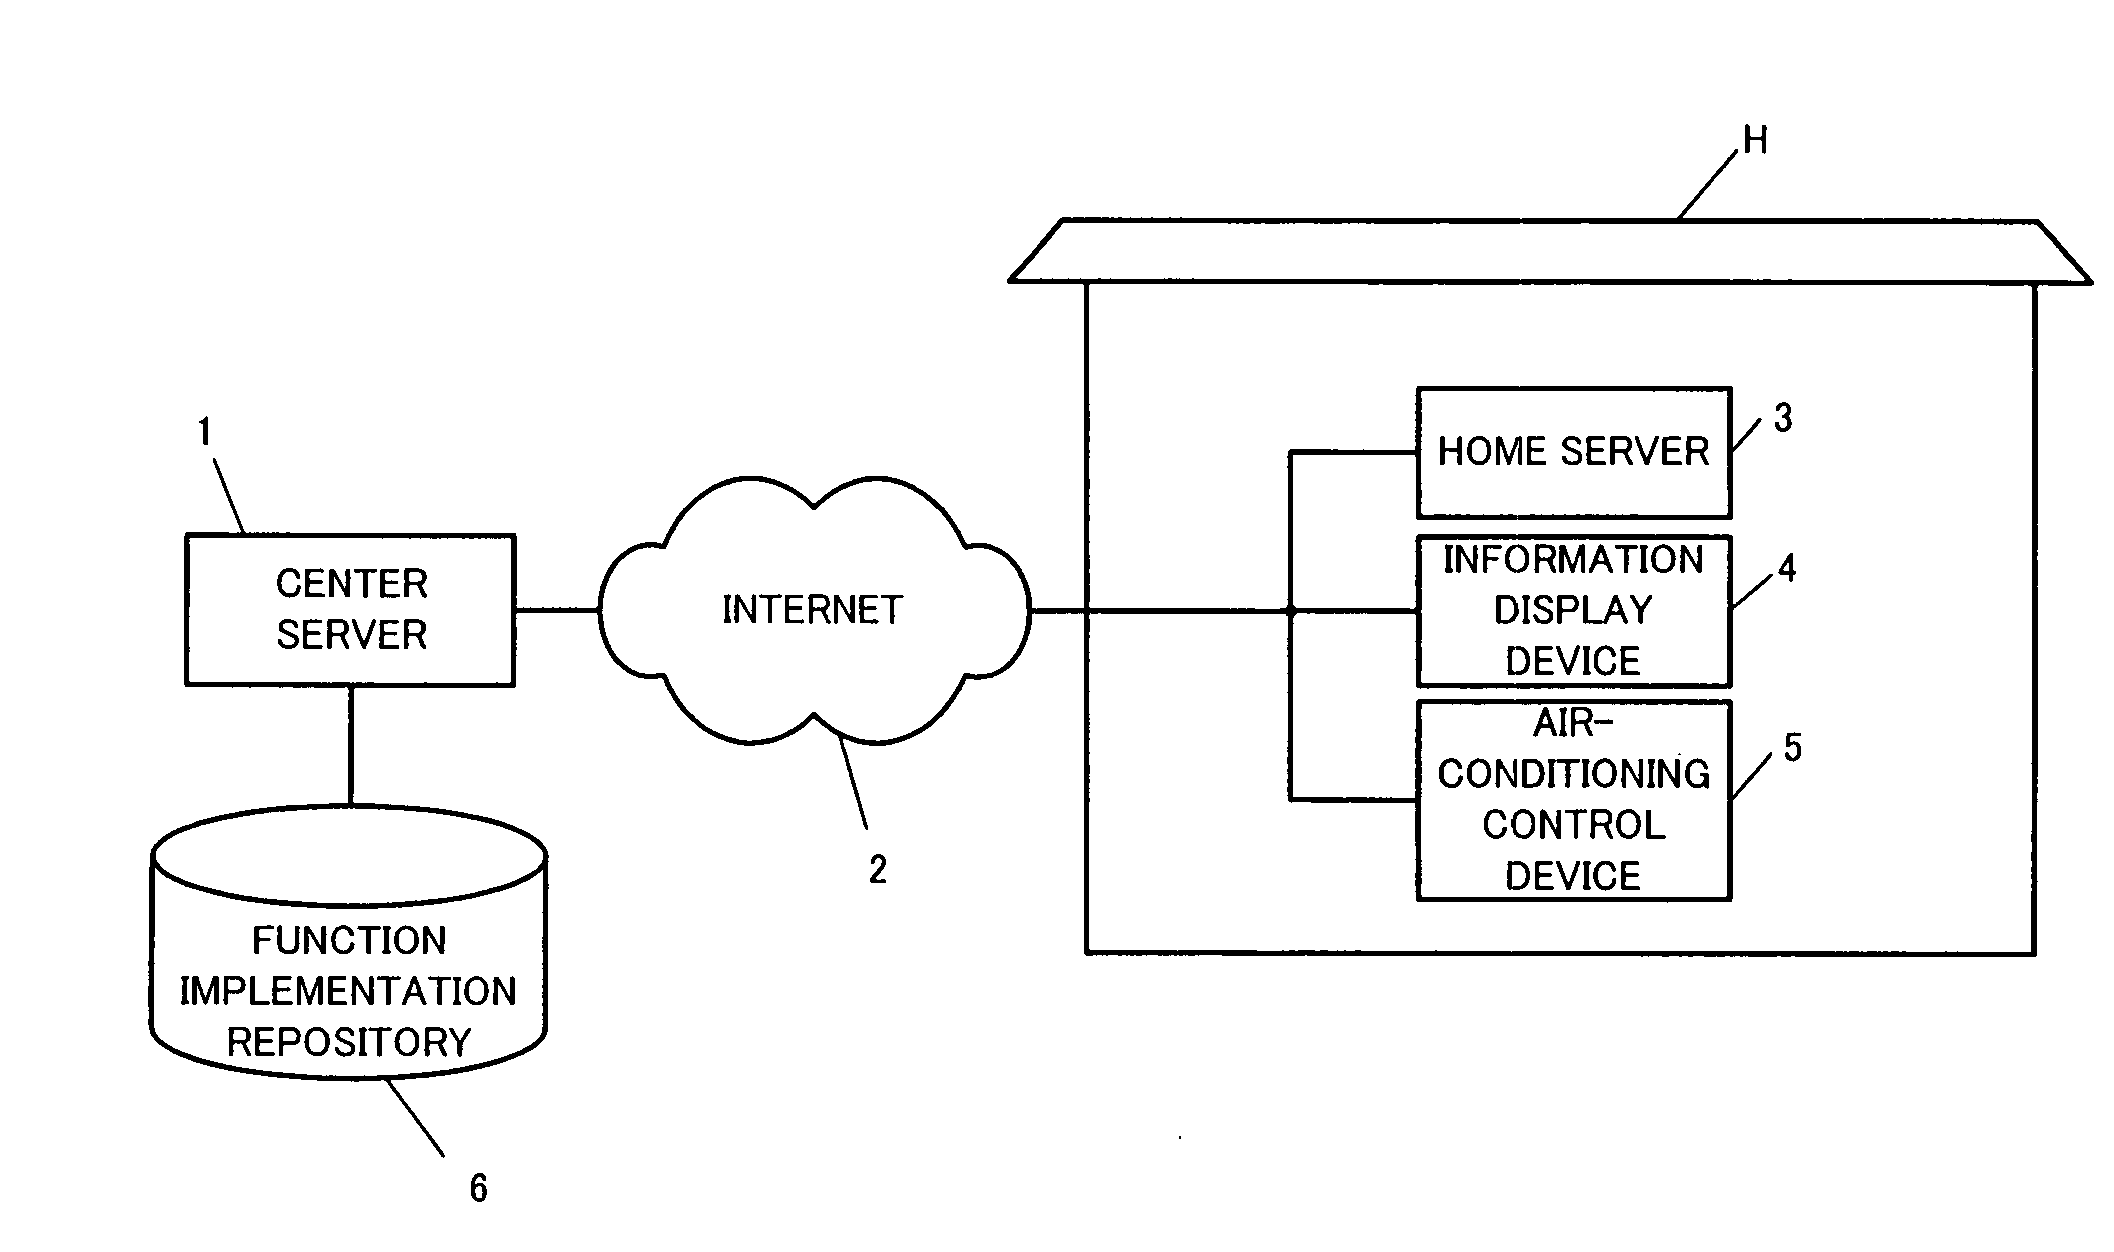 Network Equipment System